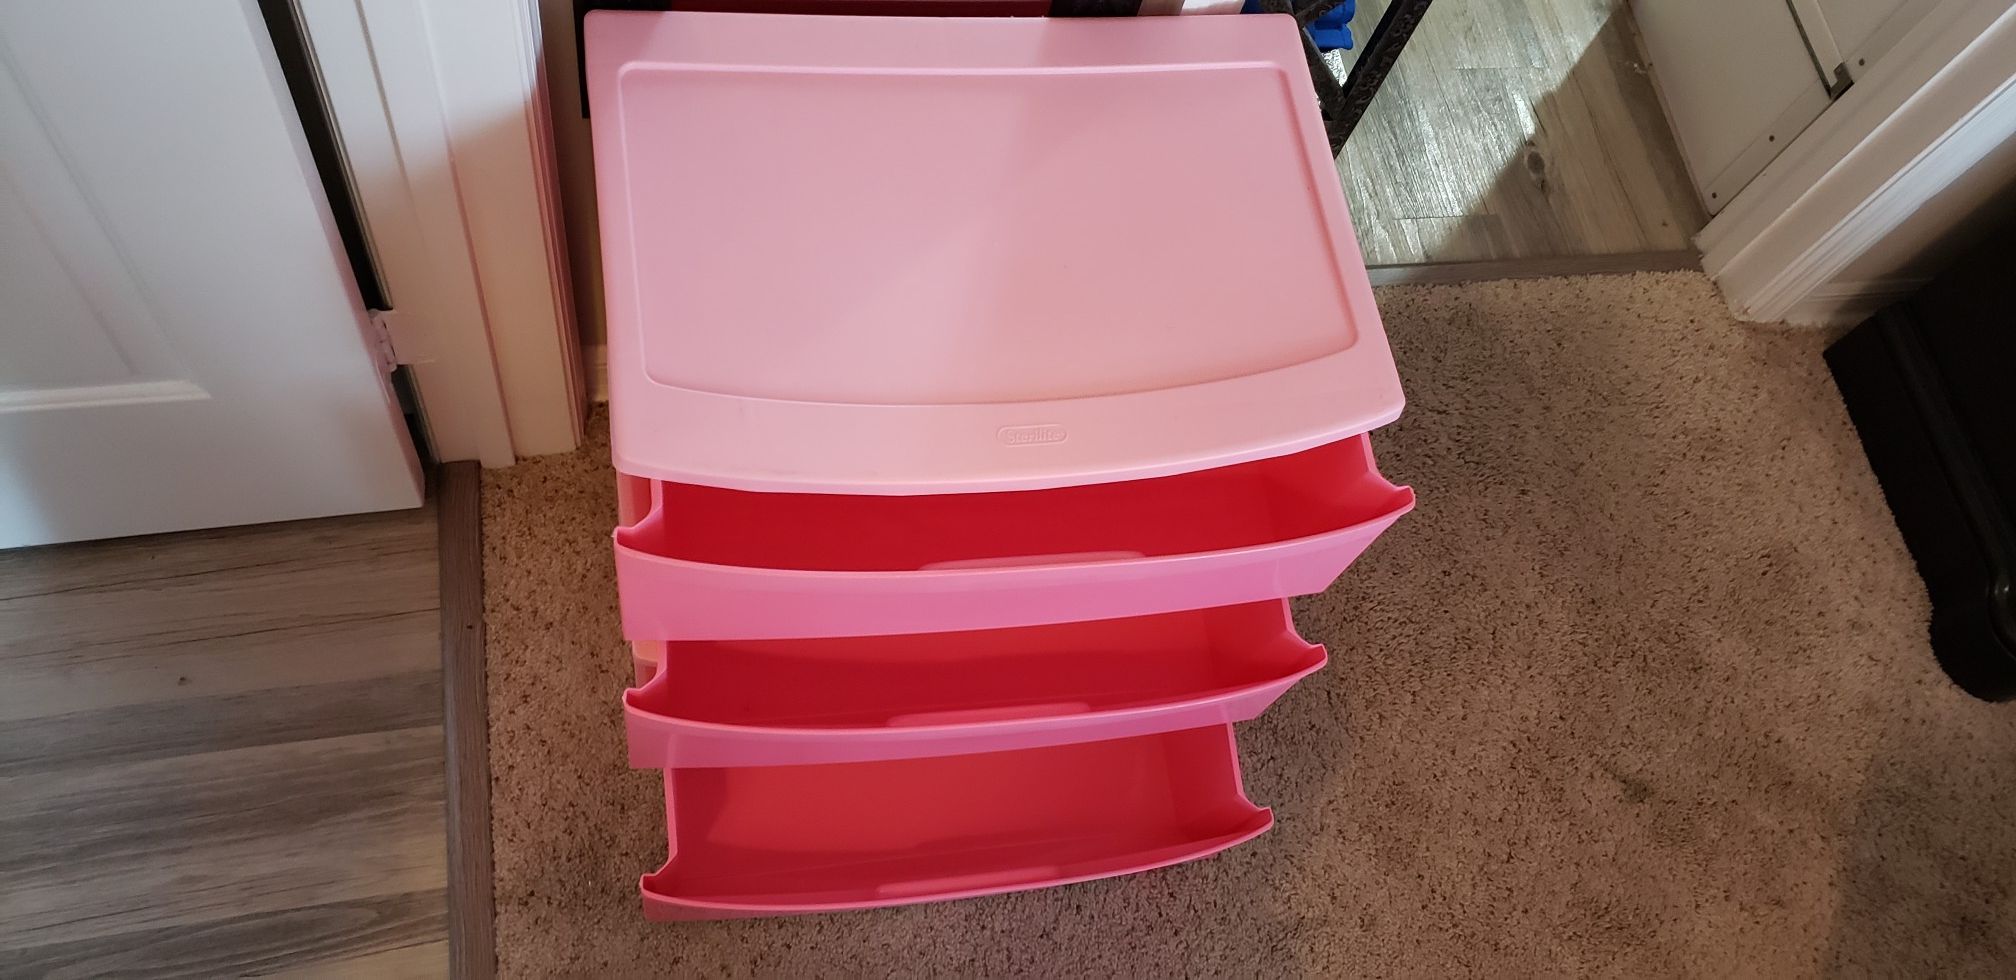 3 drawer Sterilite (pink plastic) dresser